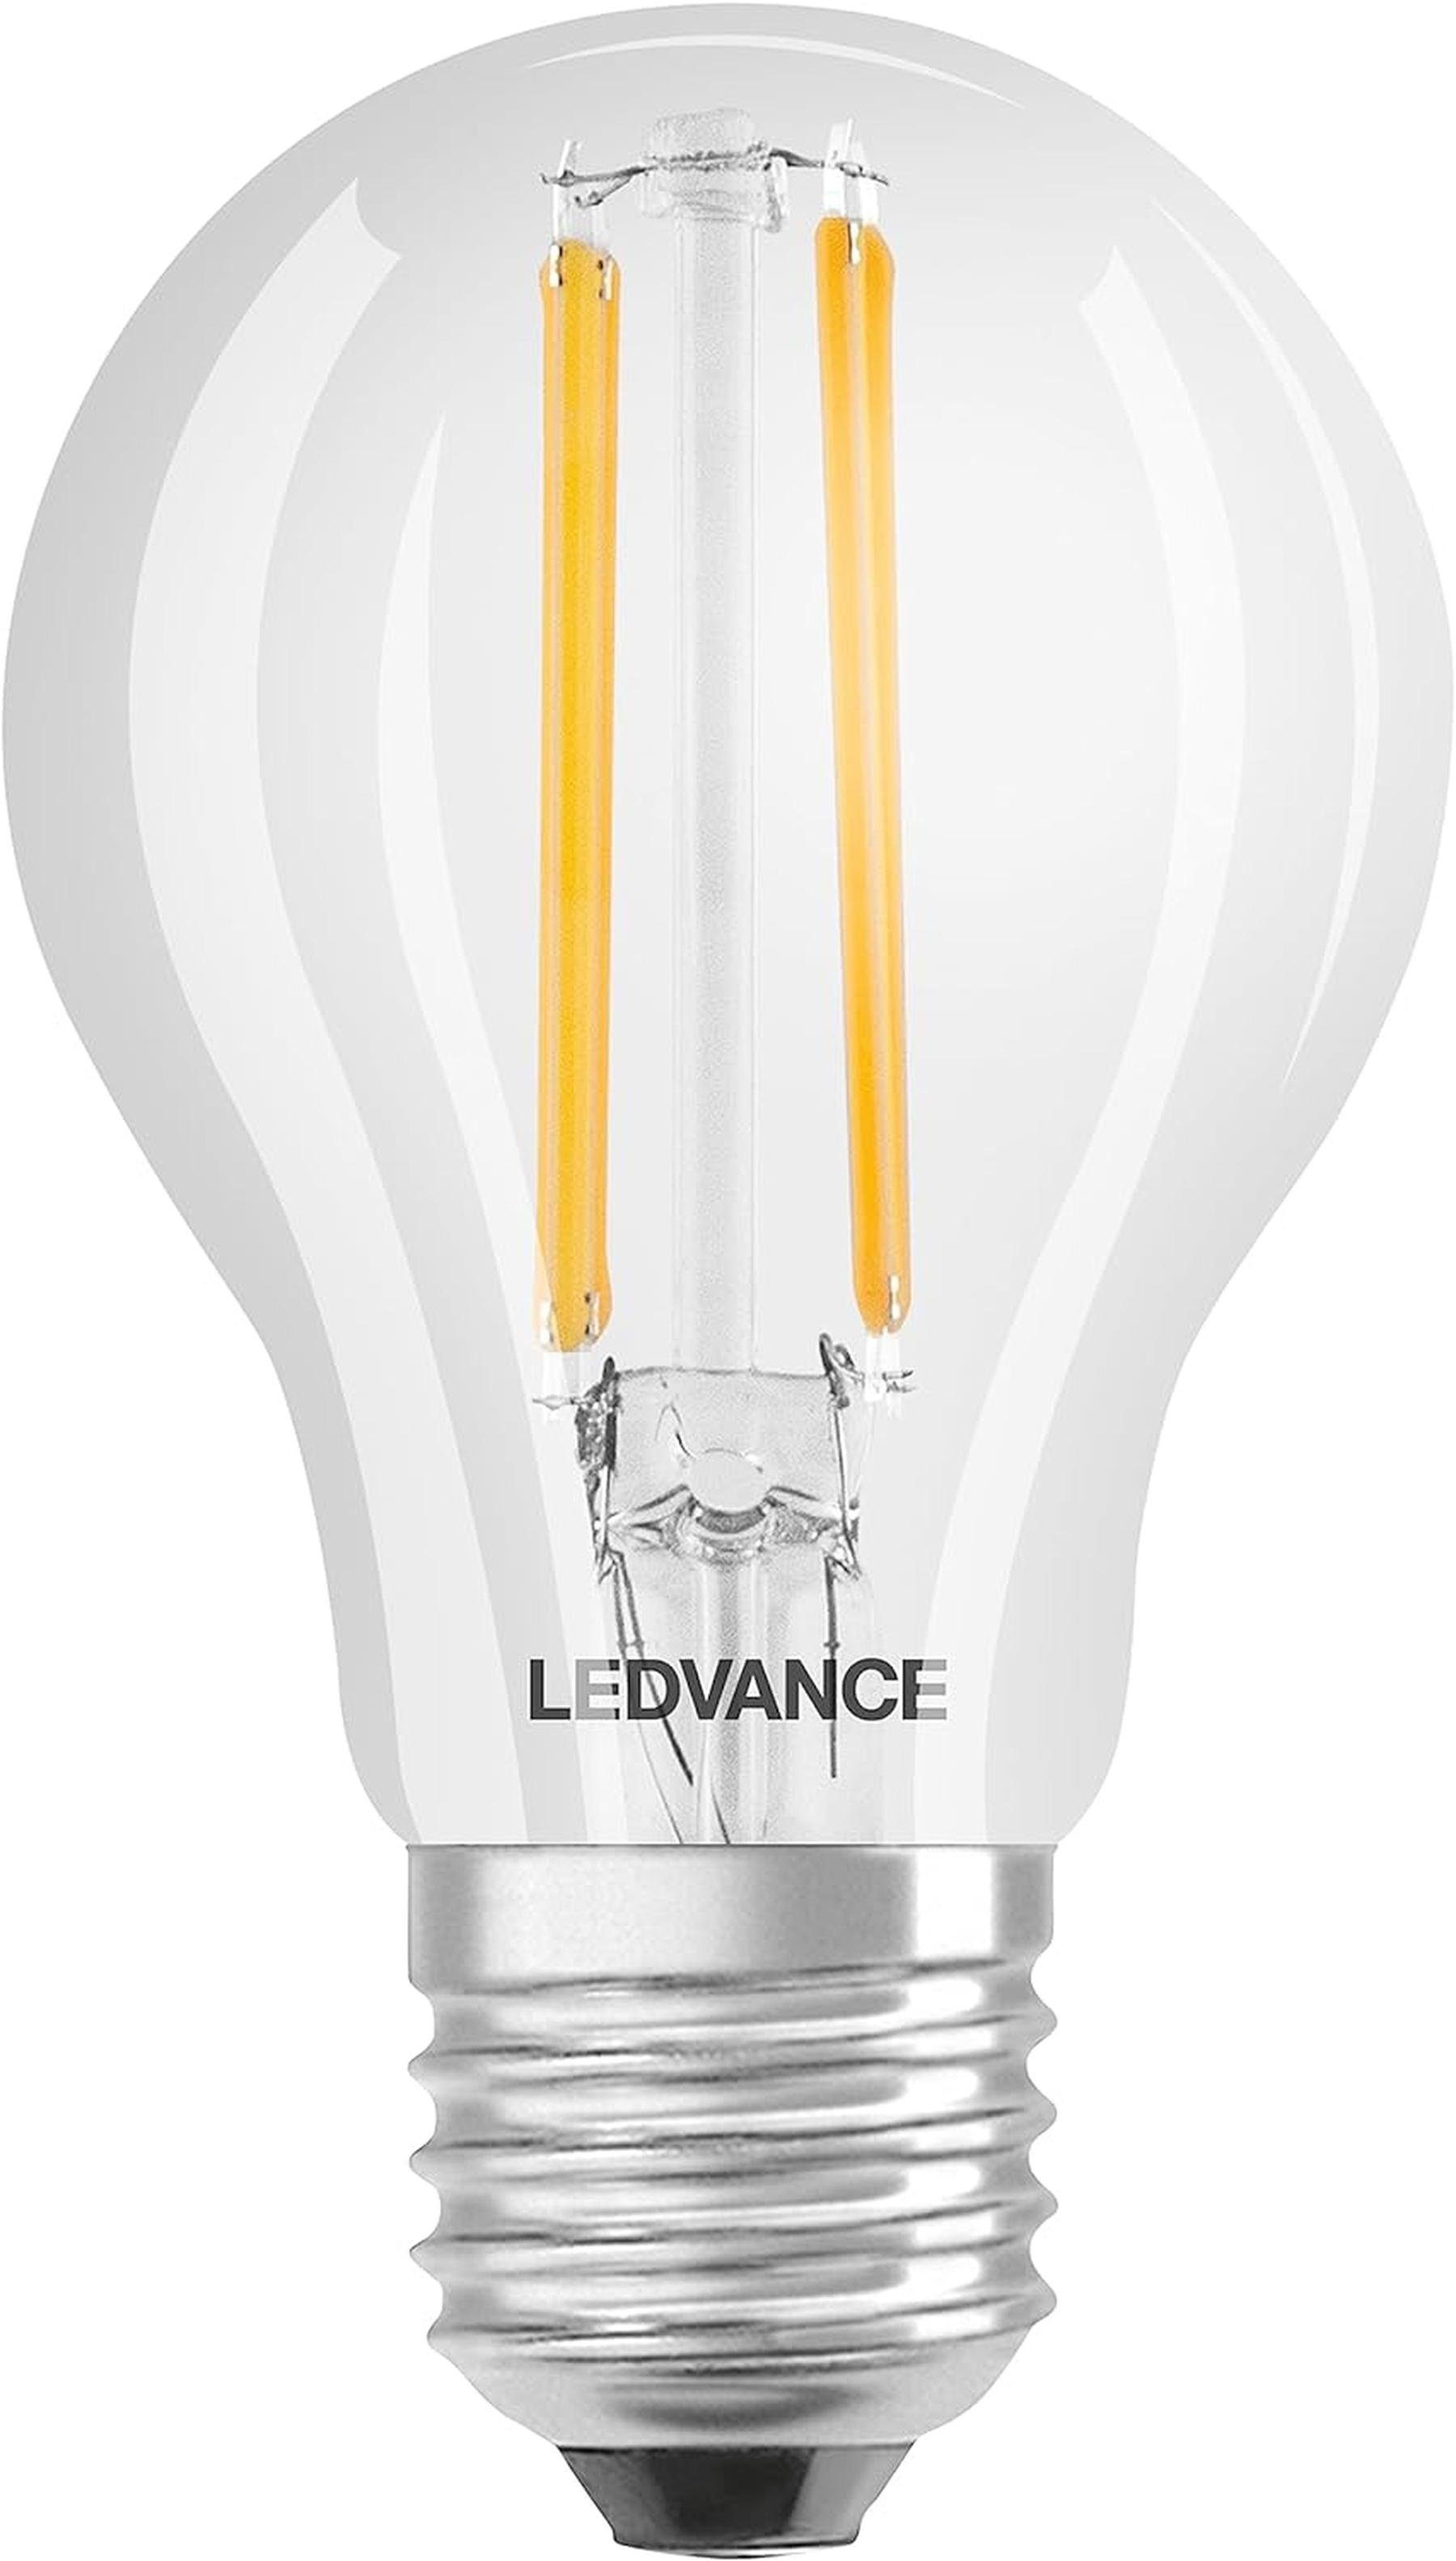 Ledvance 60W LED-Leuchtmittel LED-Lampe Ledvance Technologie Smarte WiFi mit